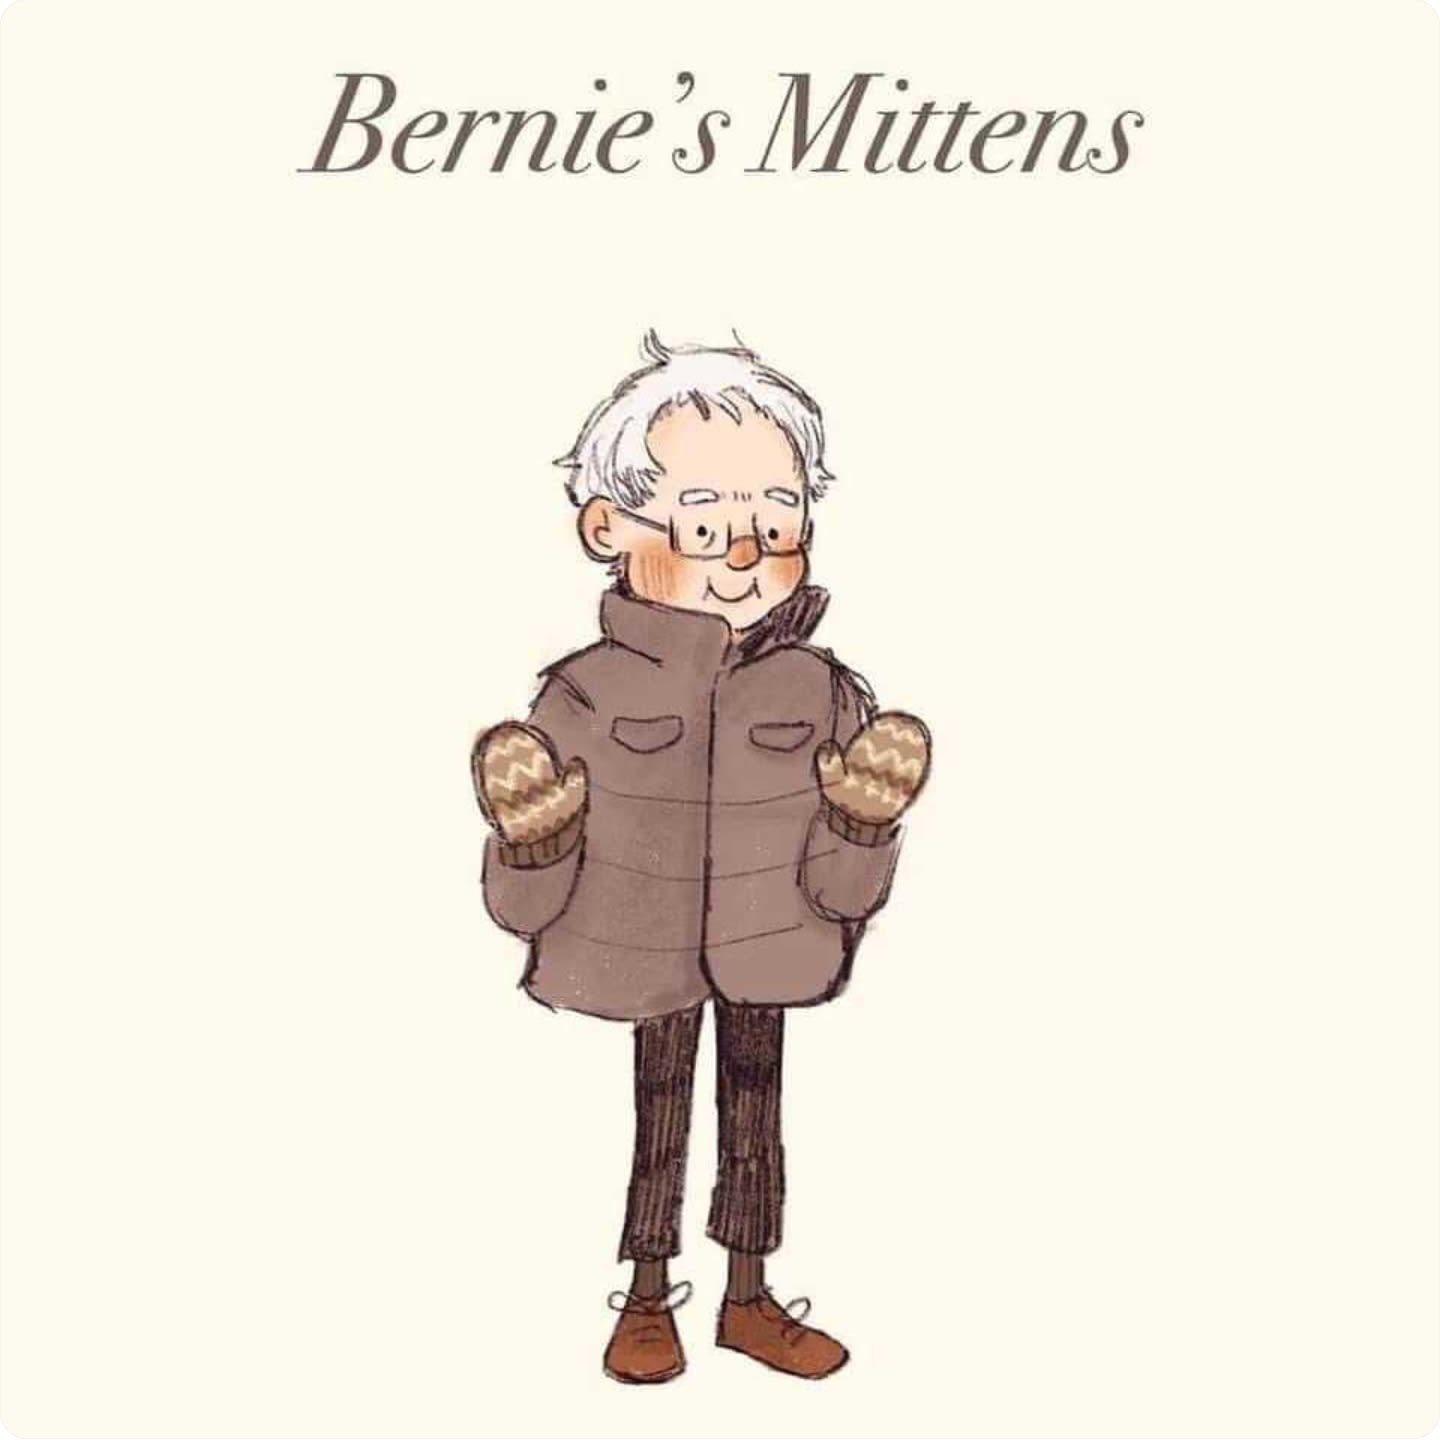 Bernie's Mittens, lily van, digital, 2021